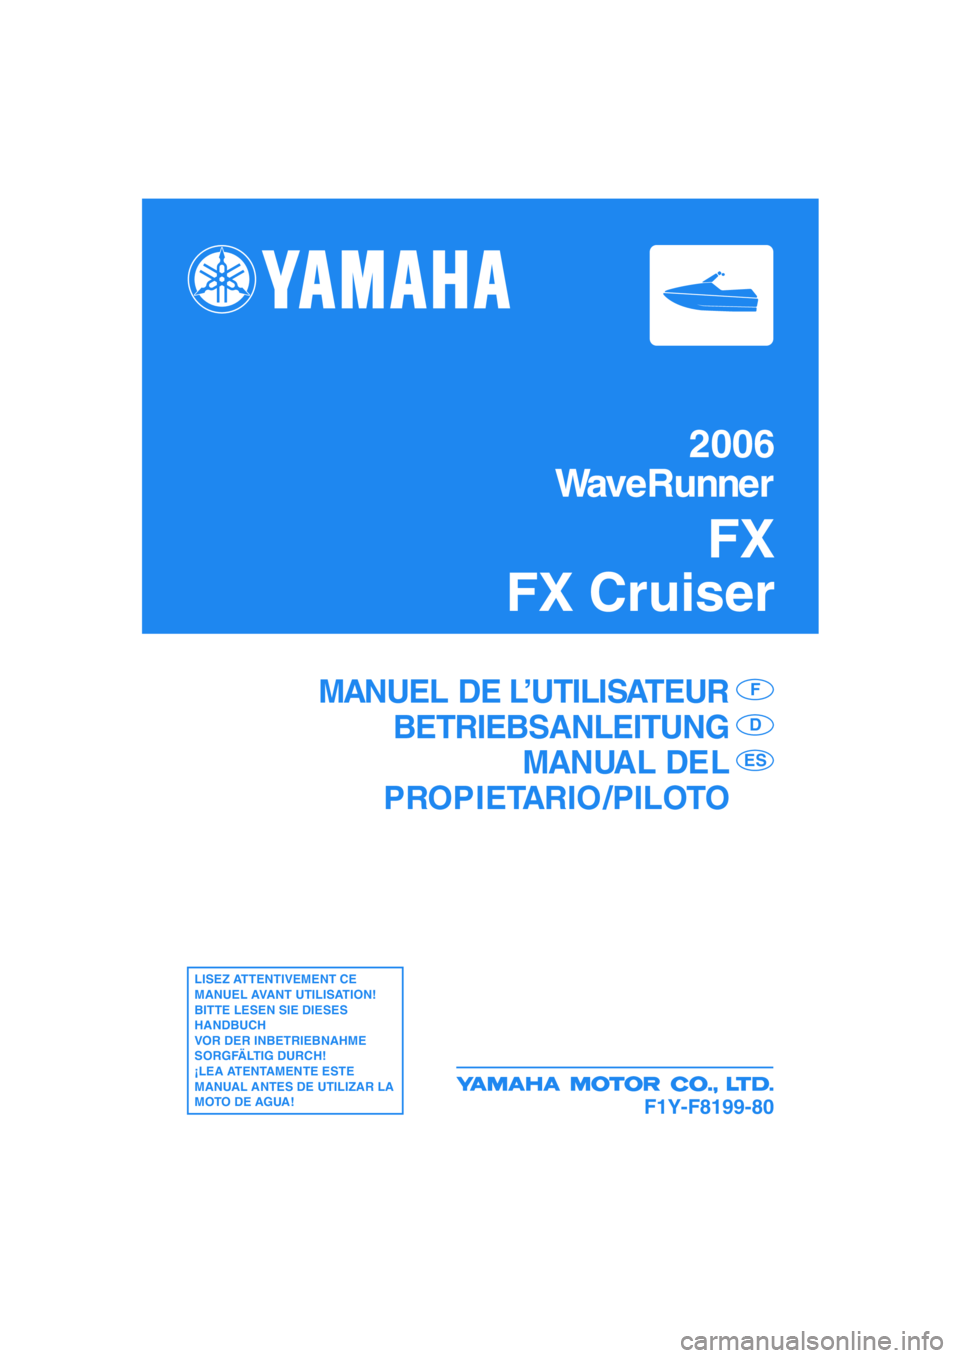 YAMAHA FX CRUISER 2006  Manuale de Empleo (in Spanish) 